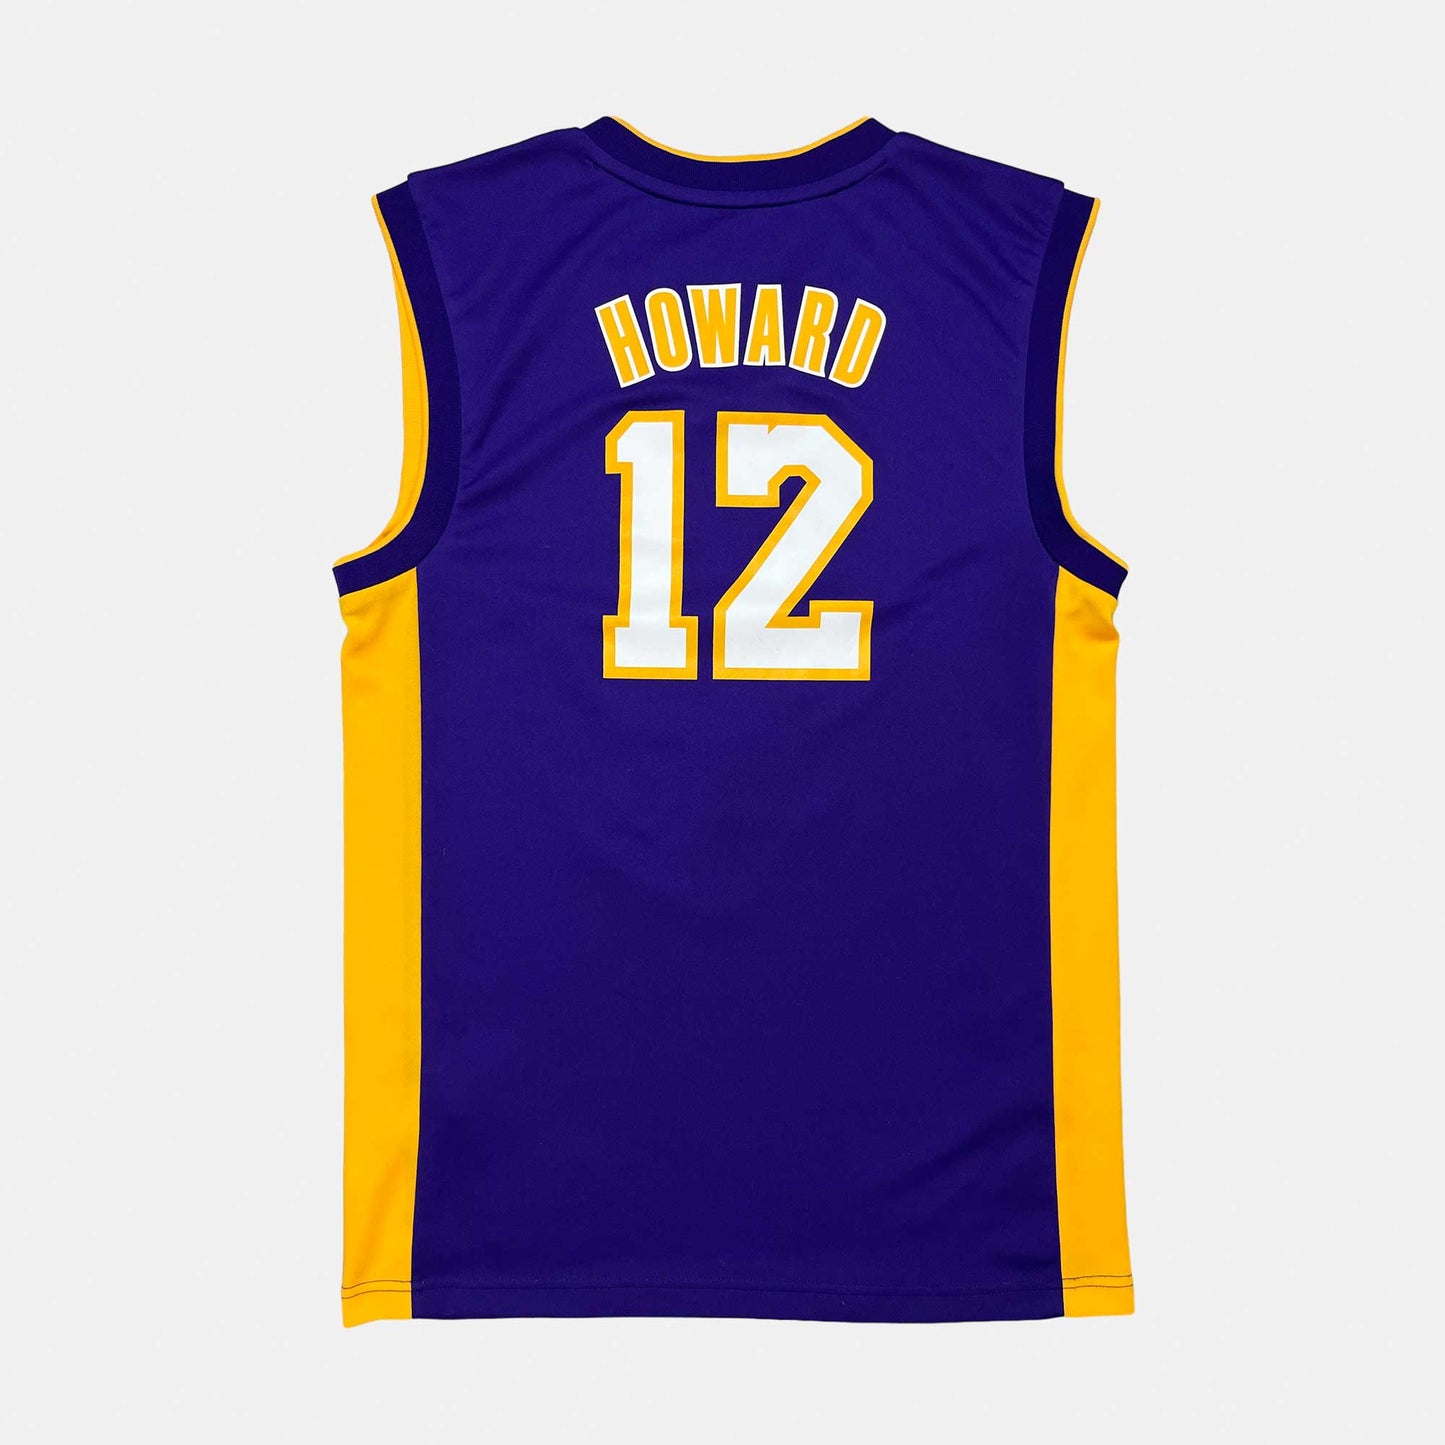 Los Angeles Lakers - Dwight Howard - Größe S - Adidas - NBA Trikot